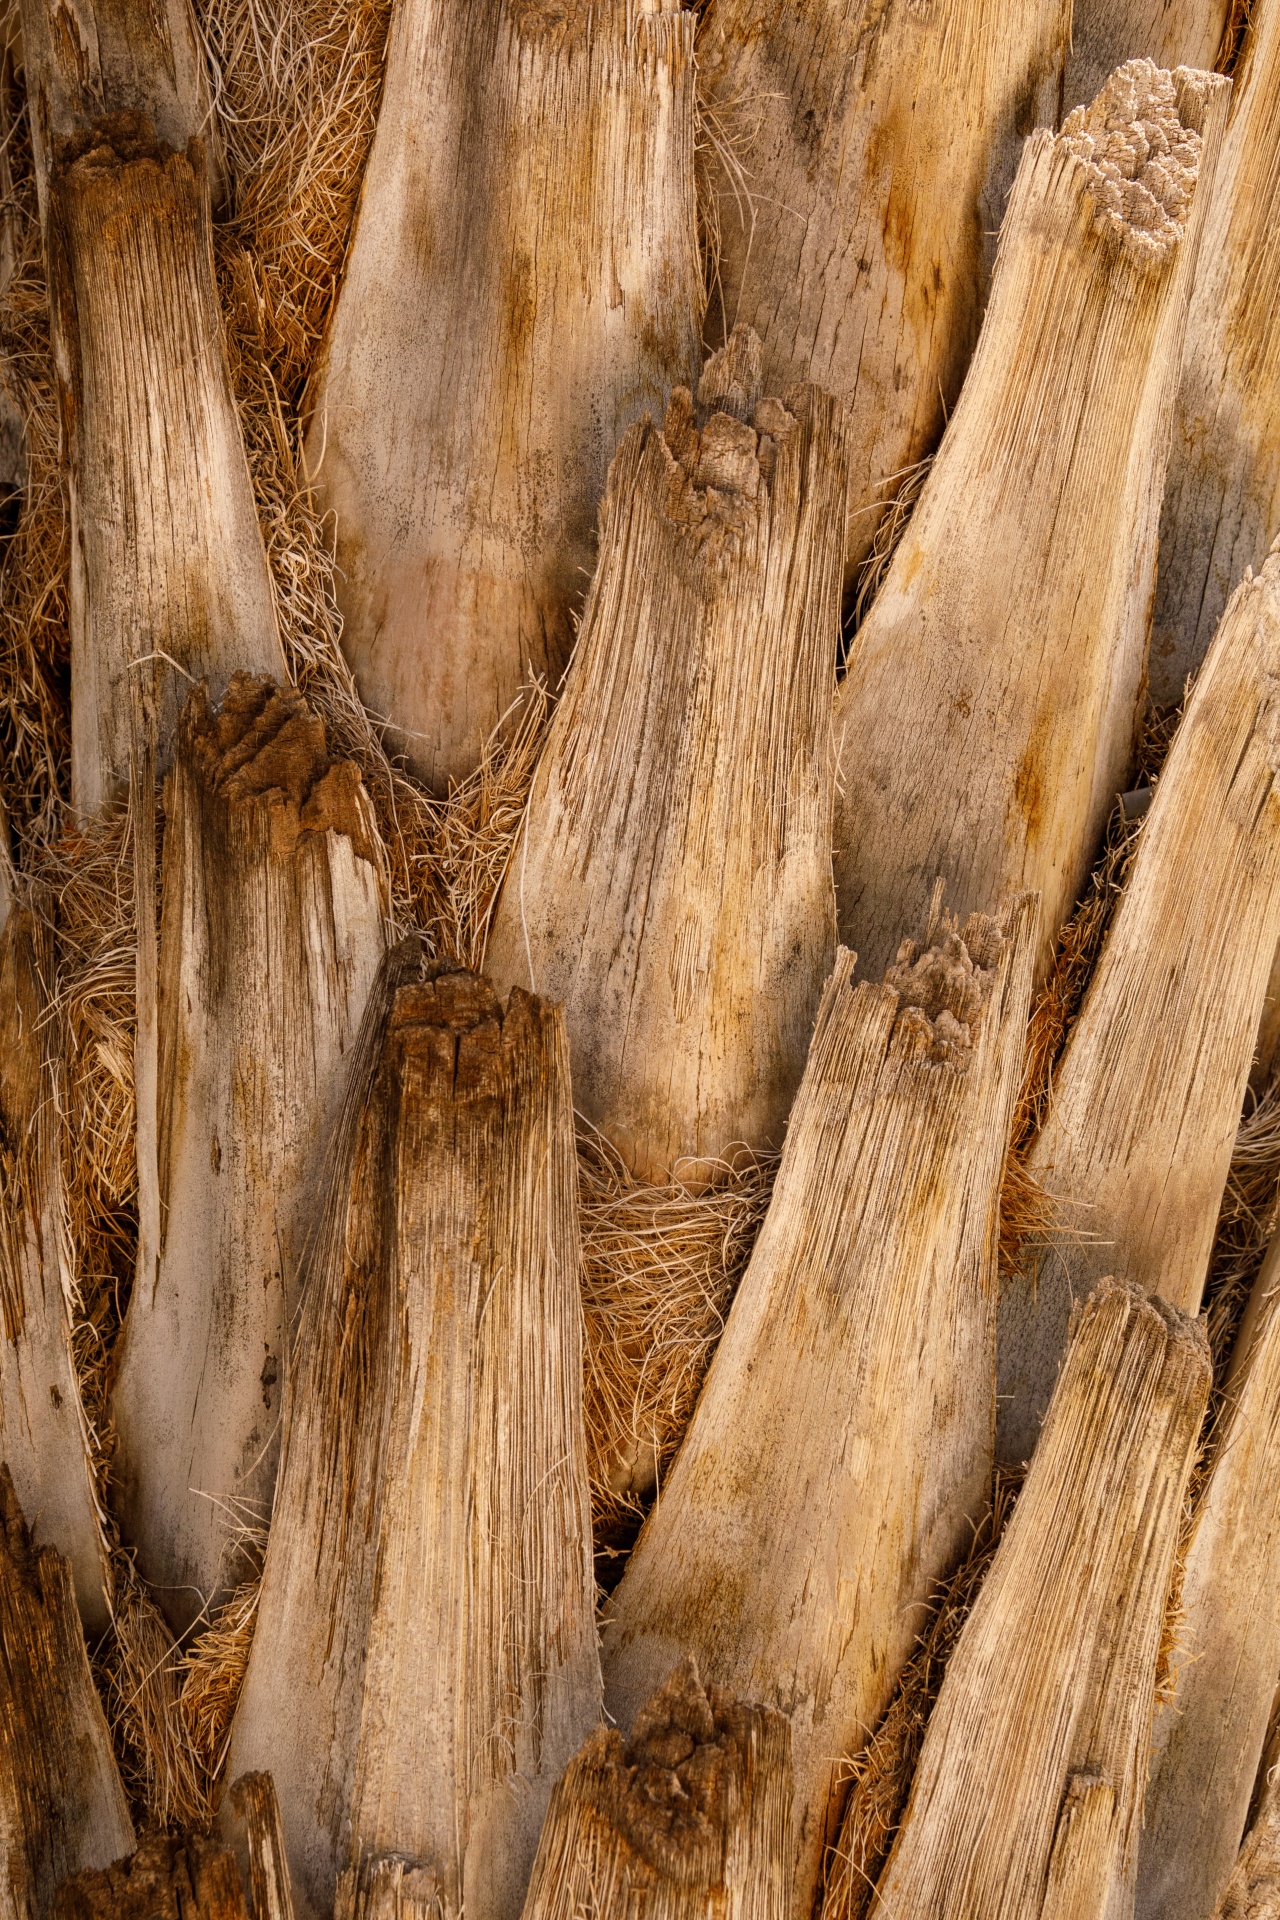 Palm Tree Trunk Texture